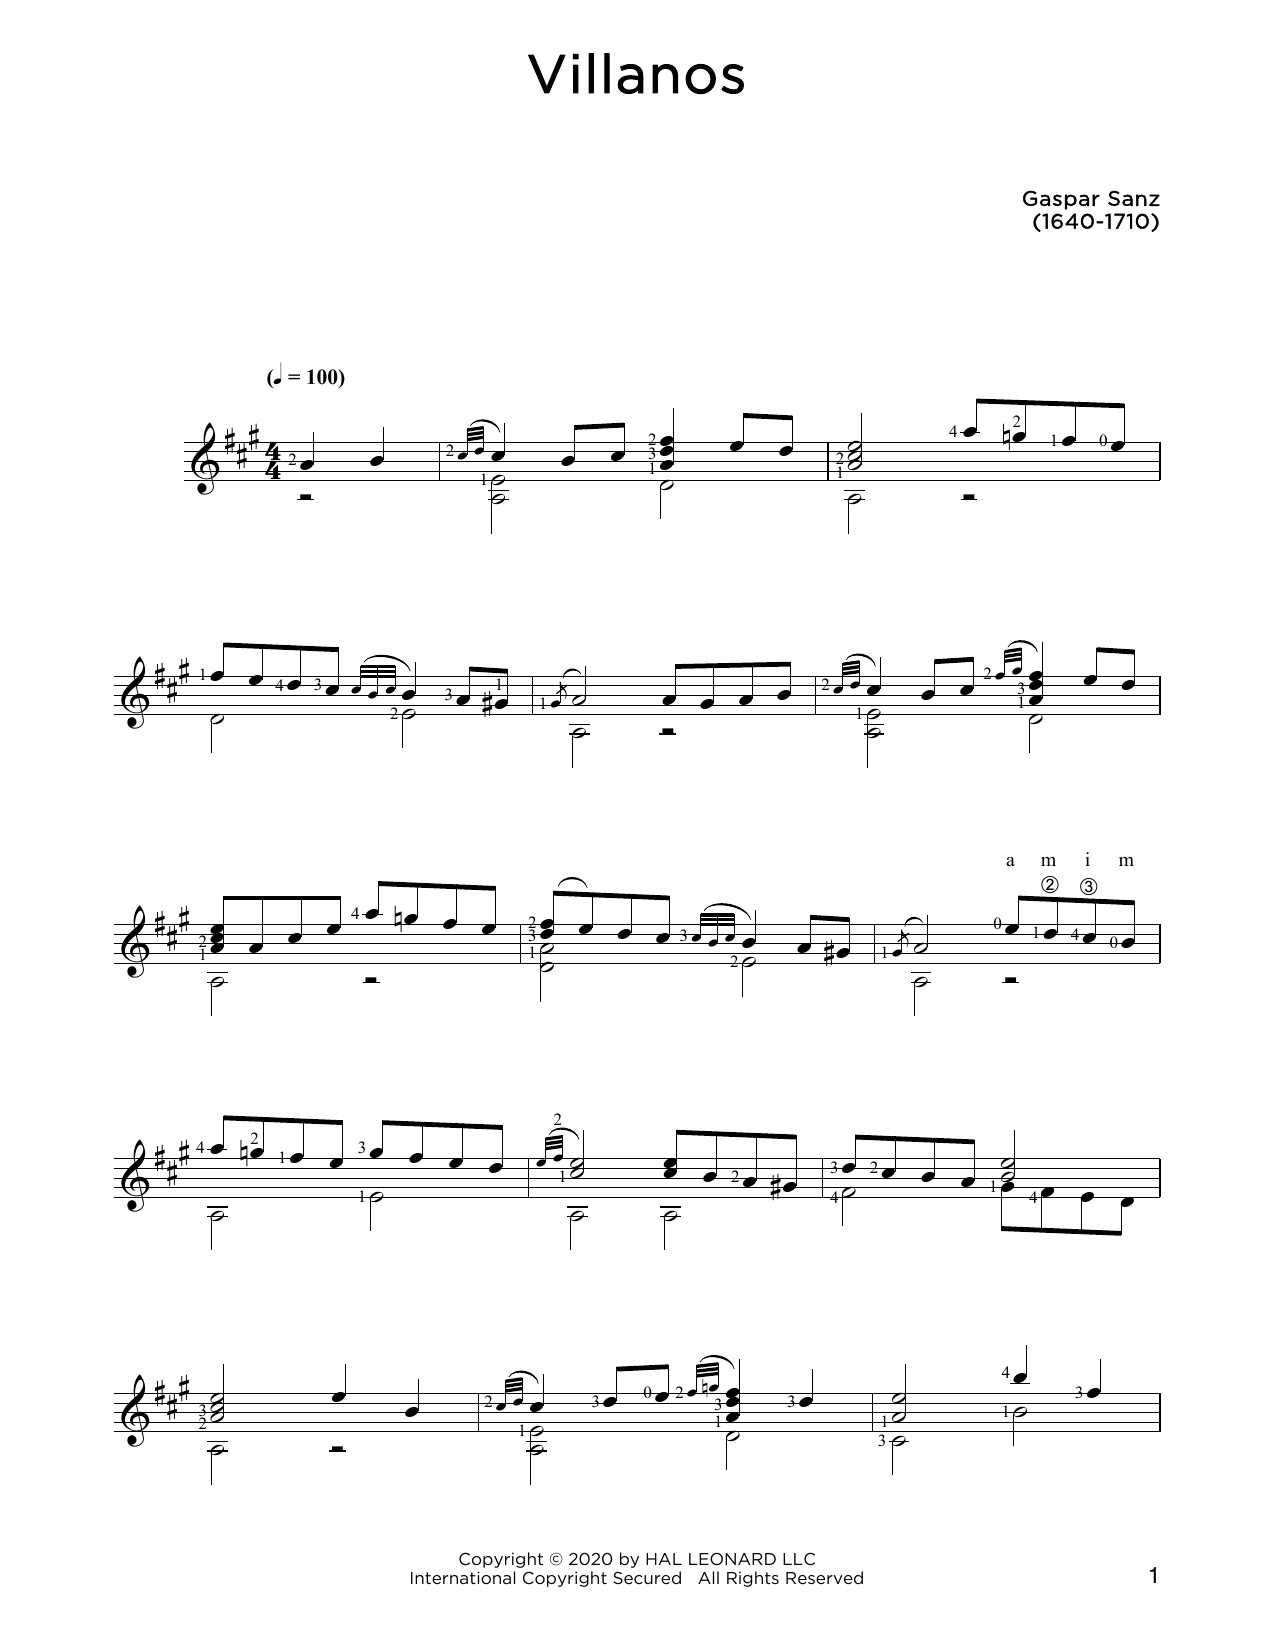 Gaspar Sanz Villanos Sheet Music Notes & Chords for Solo Guitar - Download or Print PDF